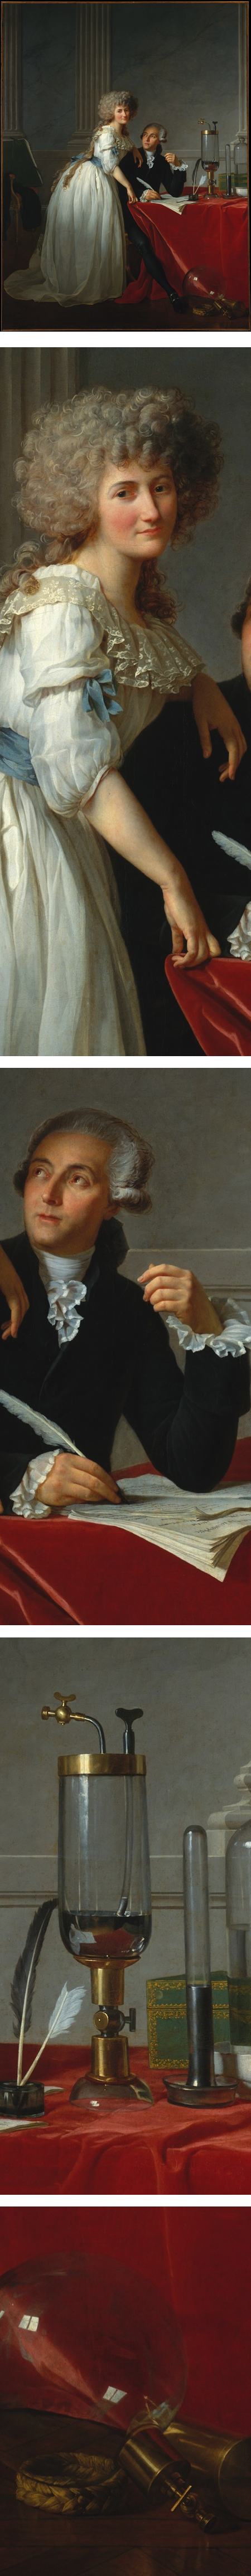 Antoine-Laurent Lavoisier and His Wife, Jacques Louis David